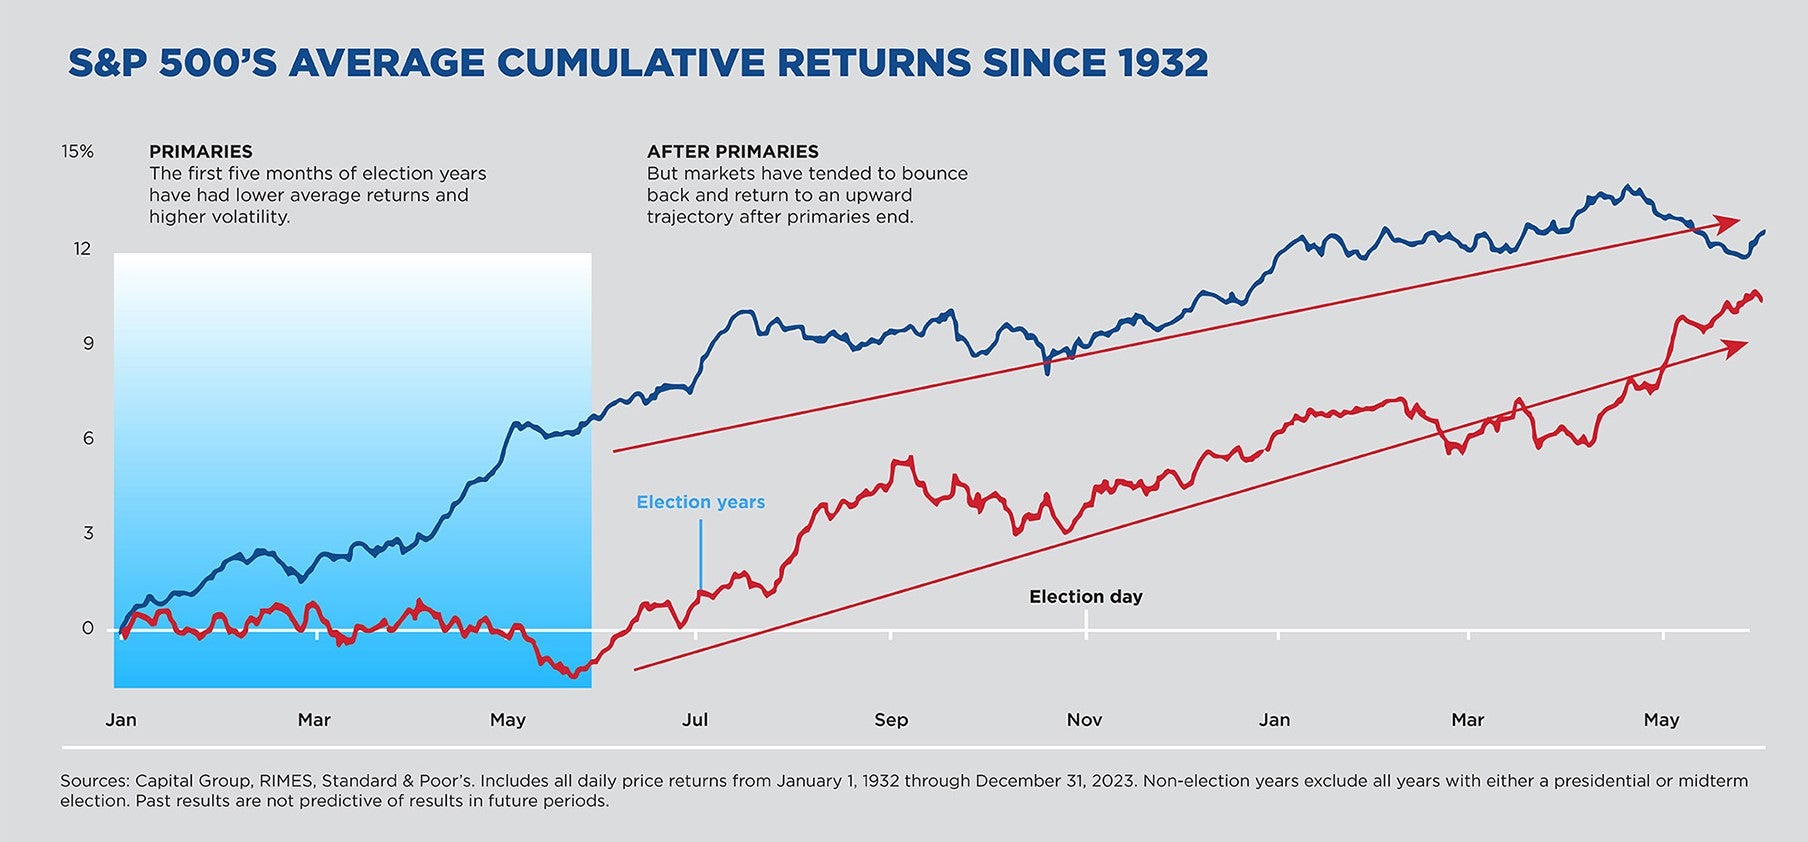 S&P 500's Average Cumulative Returns since 1932 chart